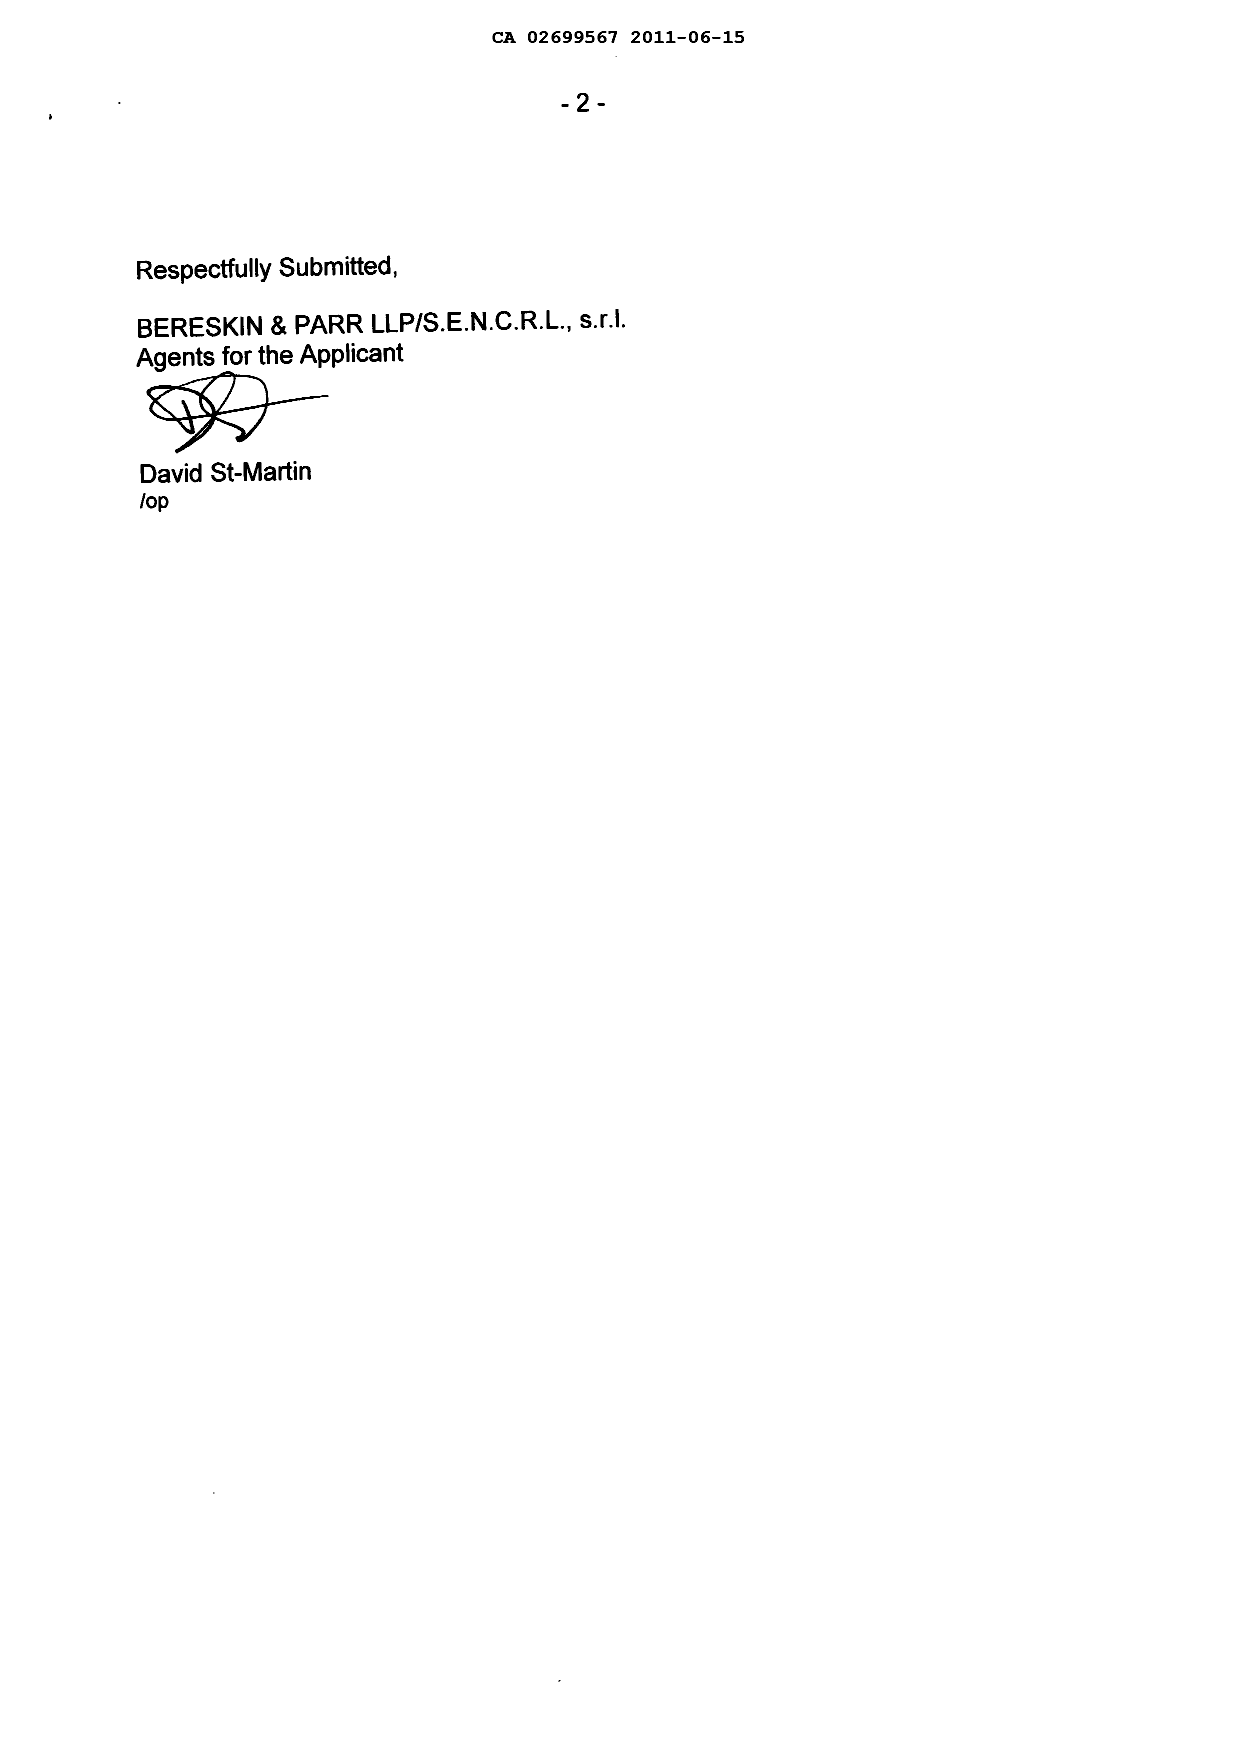 Canadian Patent Document 2699567. Correspondence 20110615. Image 2 of 2